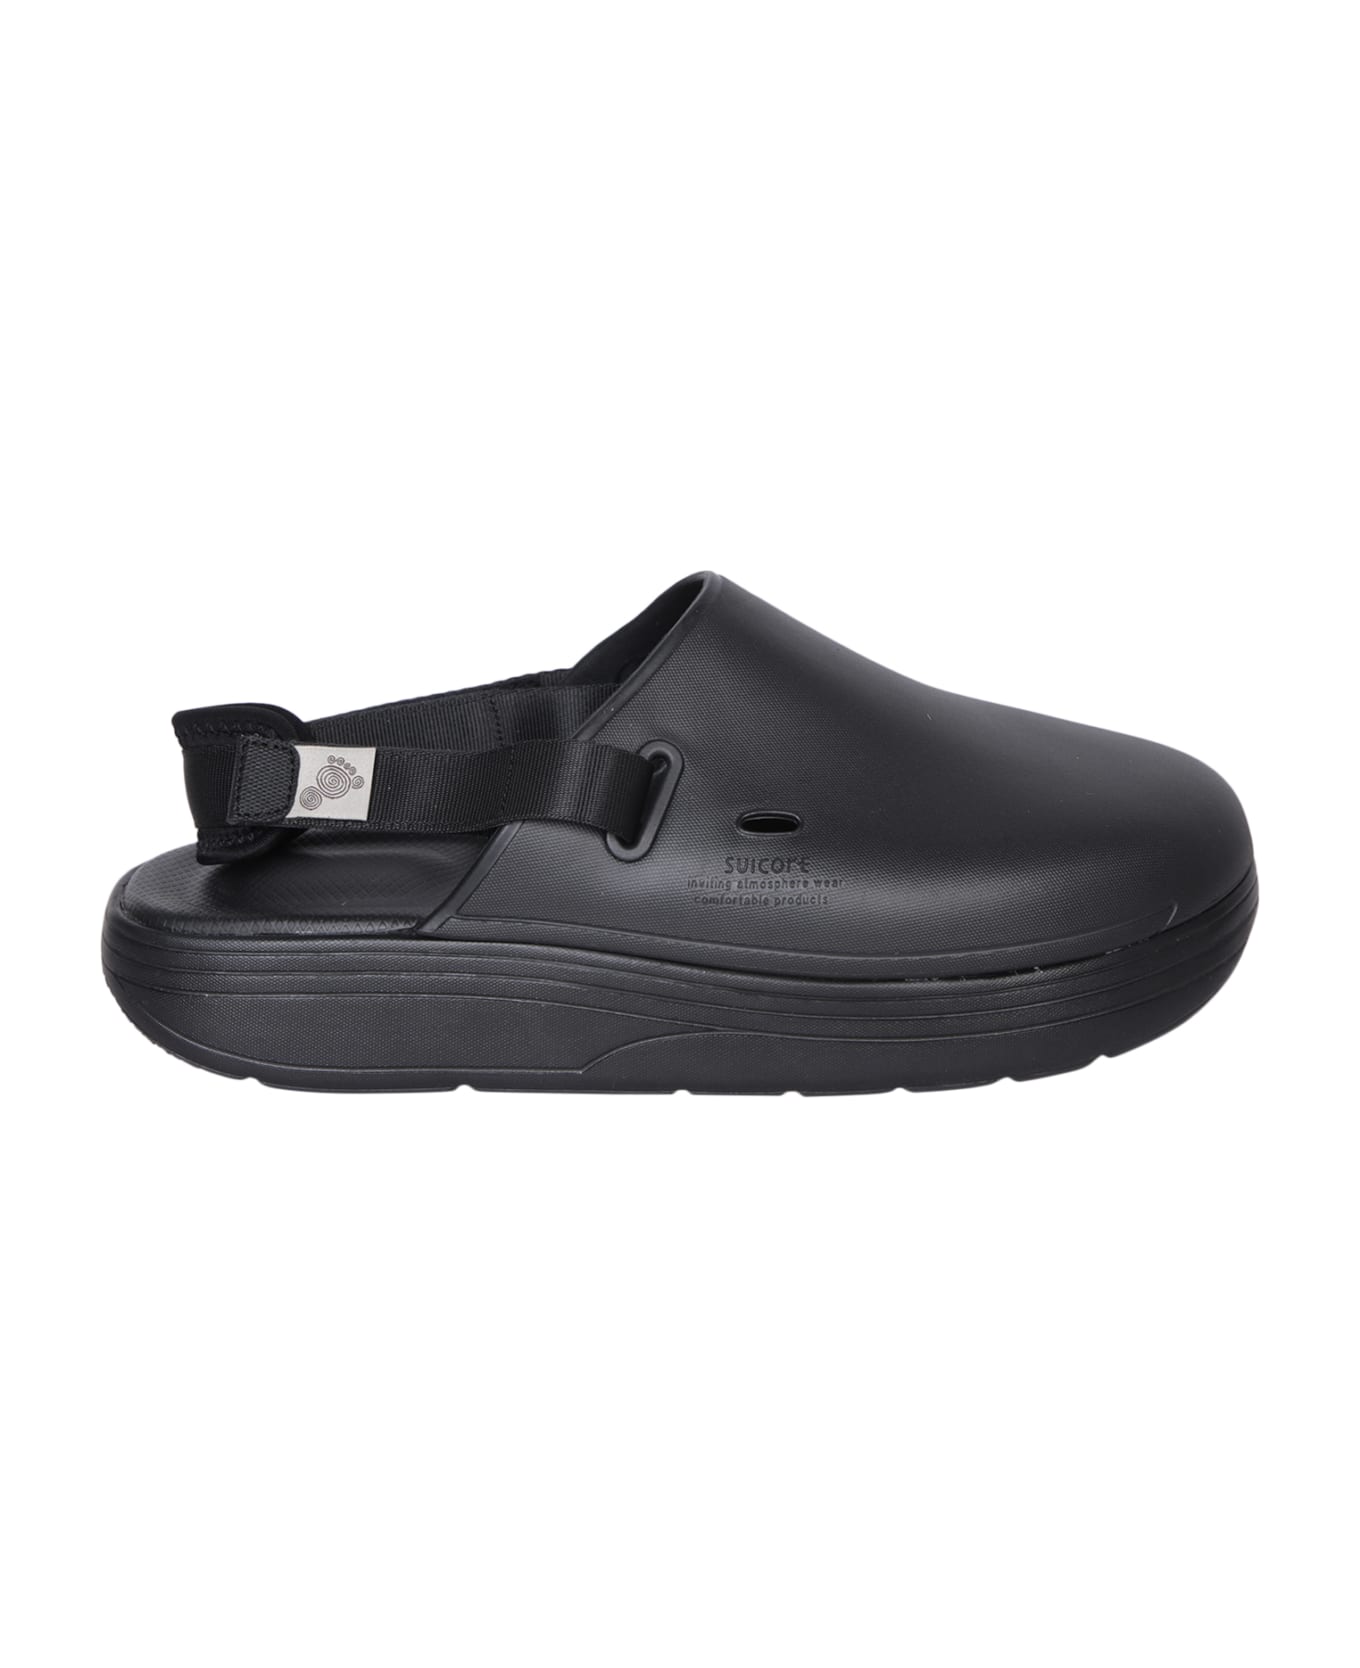 SUICOKE Cappo Black Sandals - Black